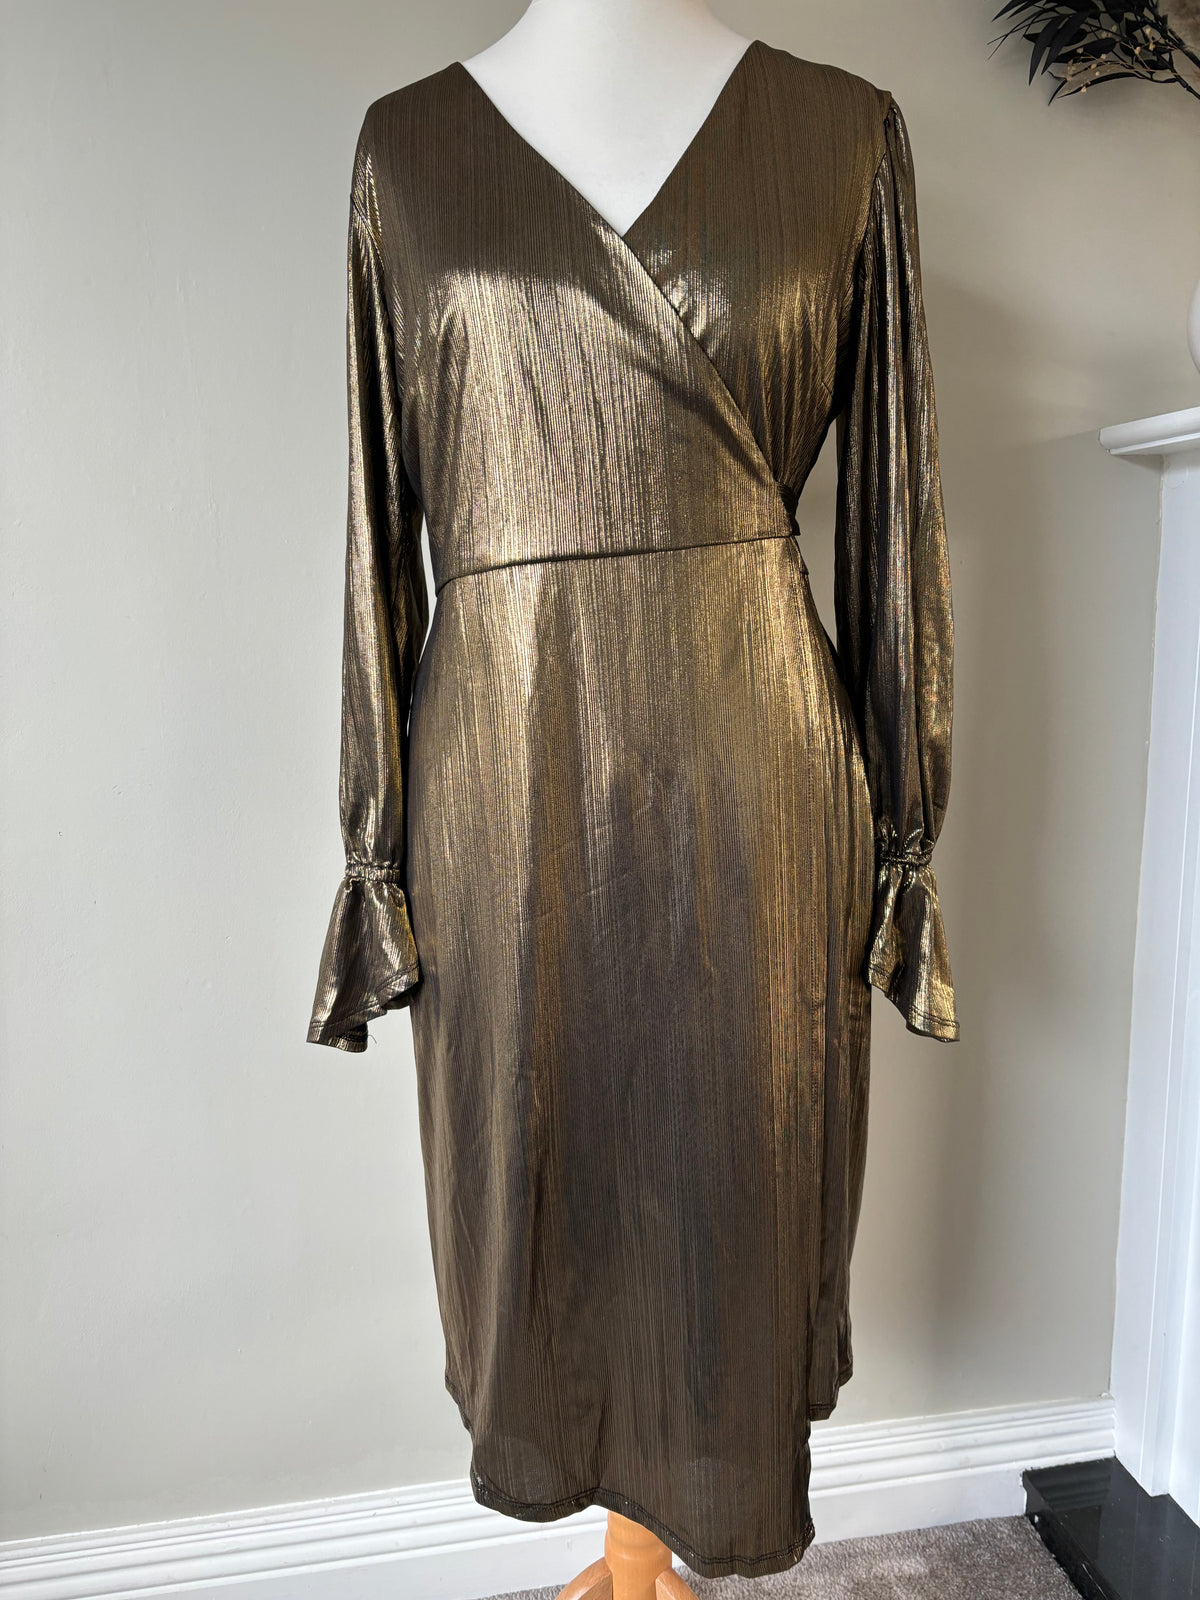 Gold Metallic Wrap Midi Dress With Stretch by Star ByJulien Macdonald Size 16